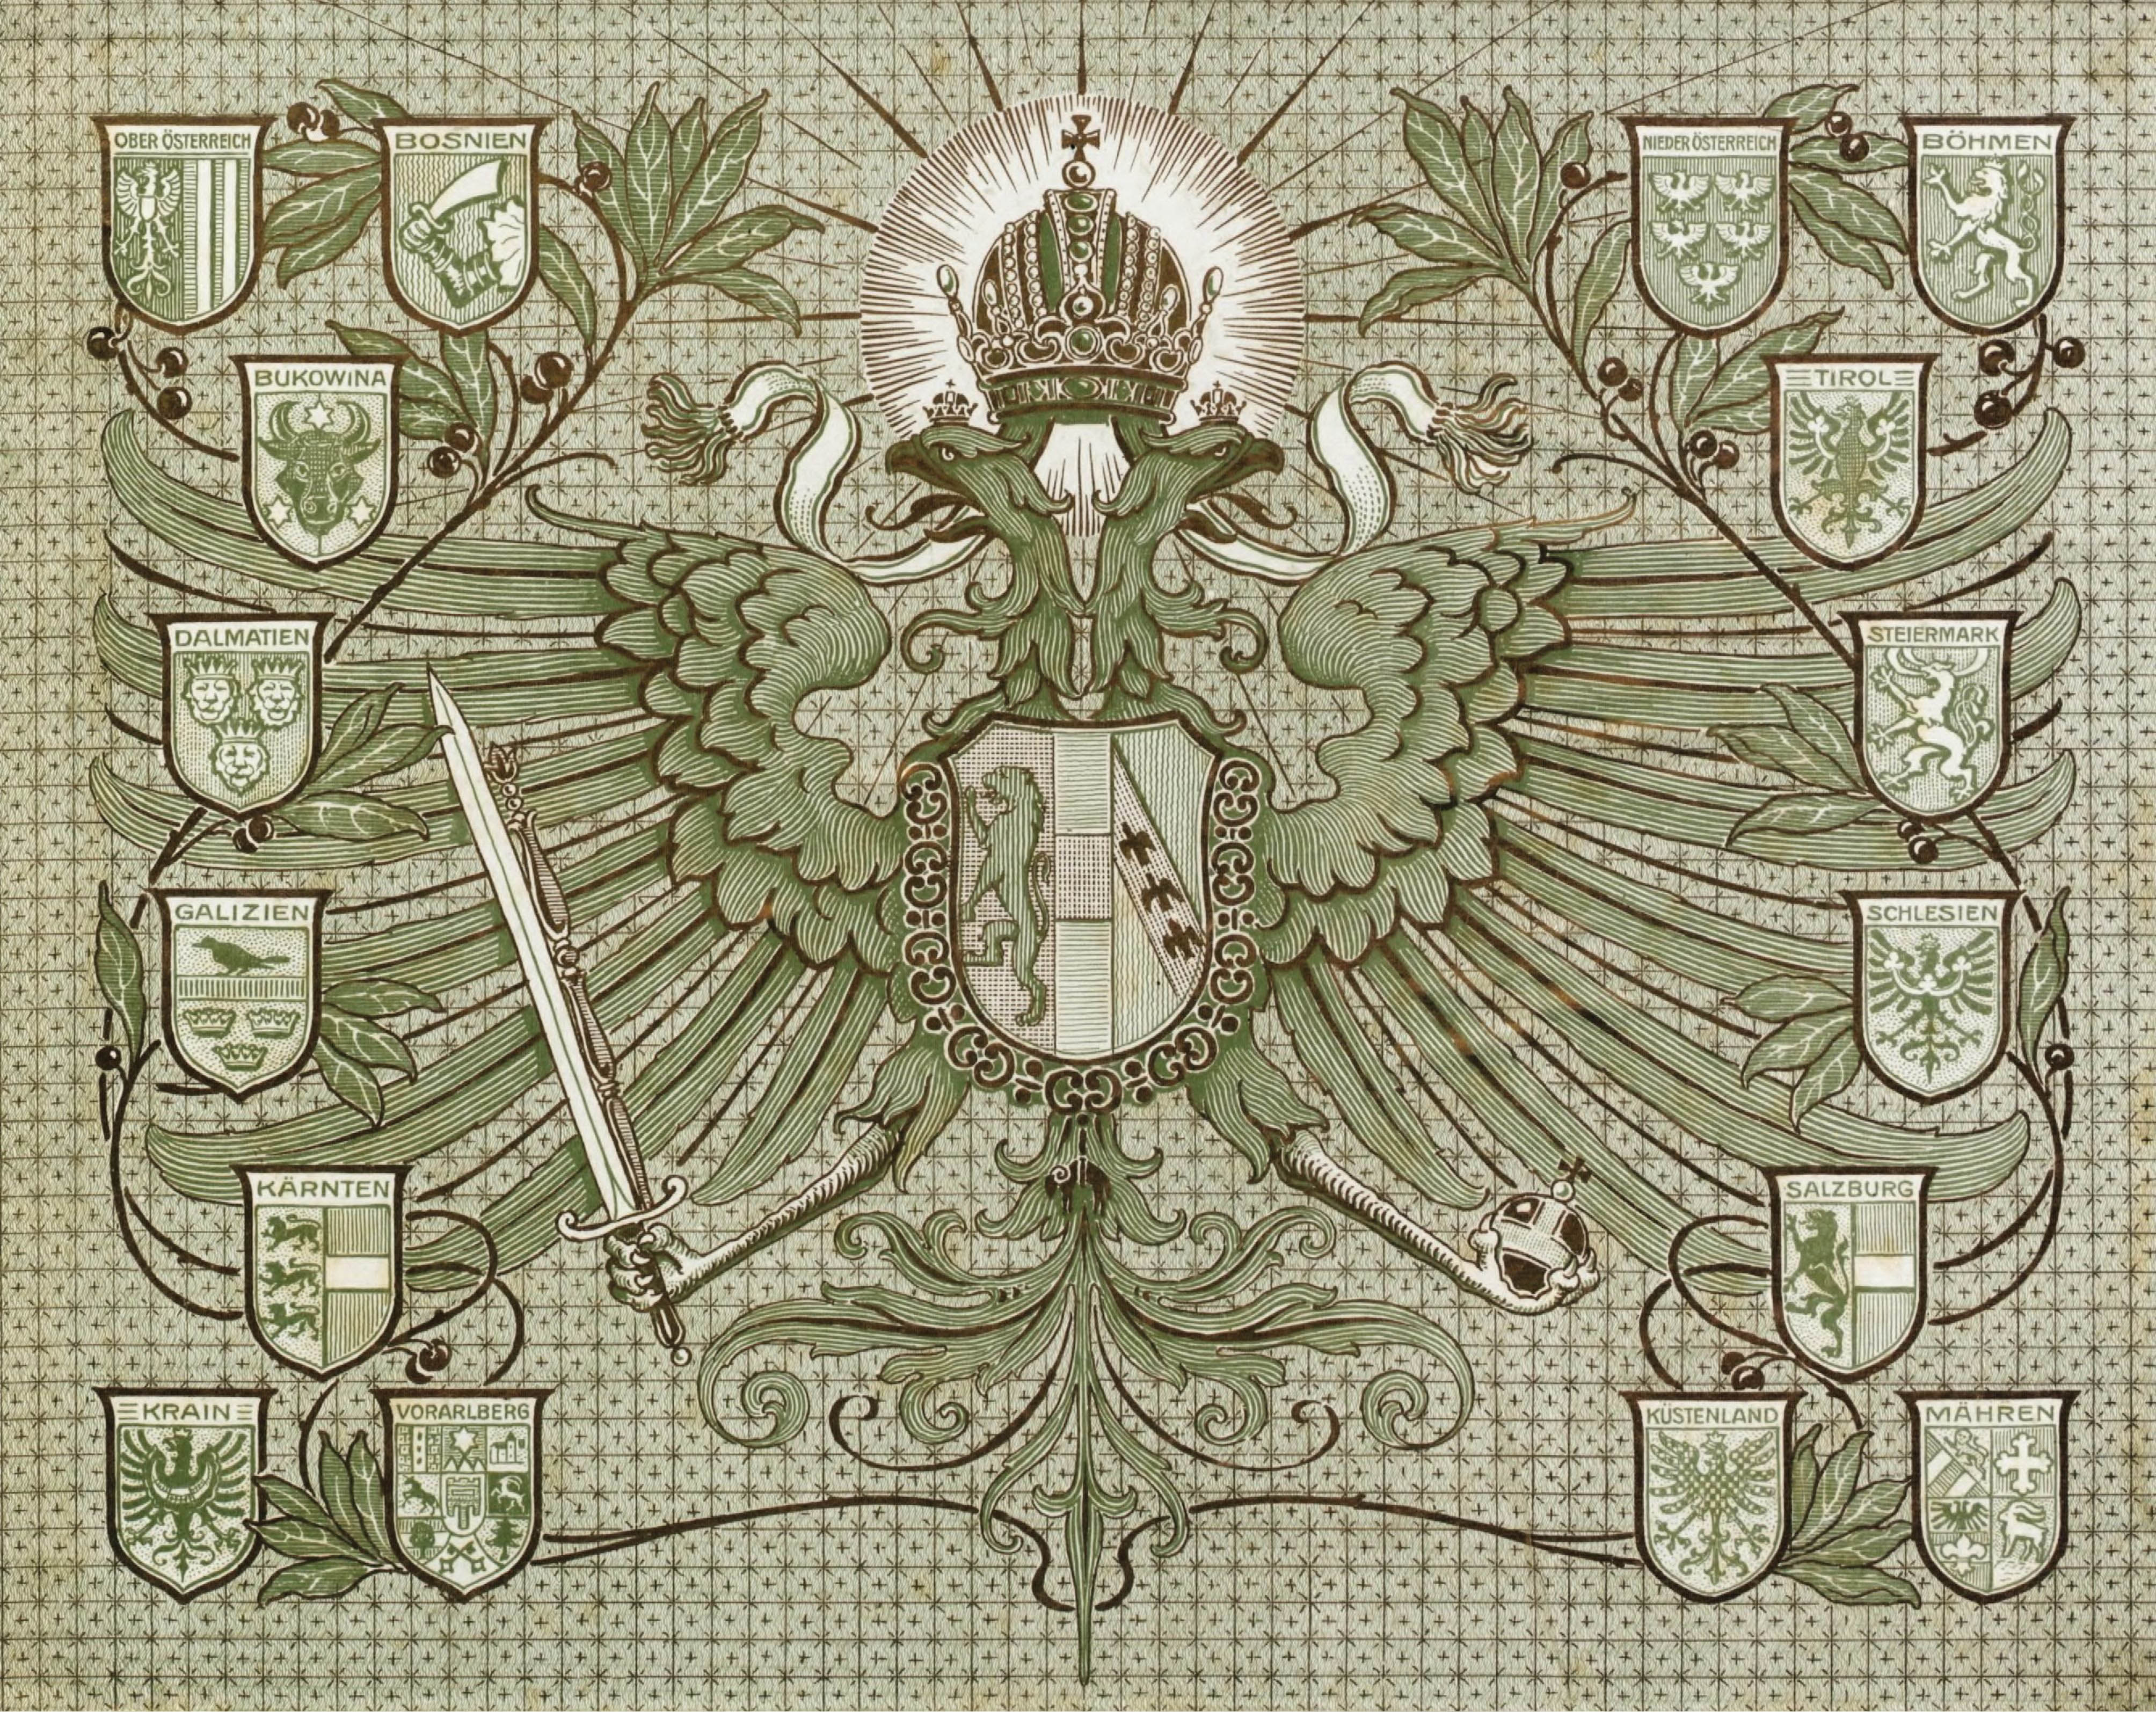 Grb Avstroogrske, ok. 1900 (dLib)